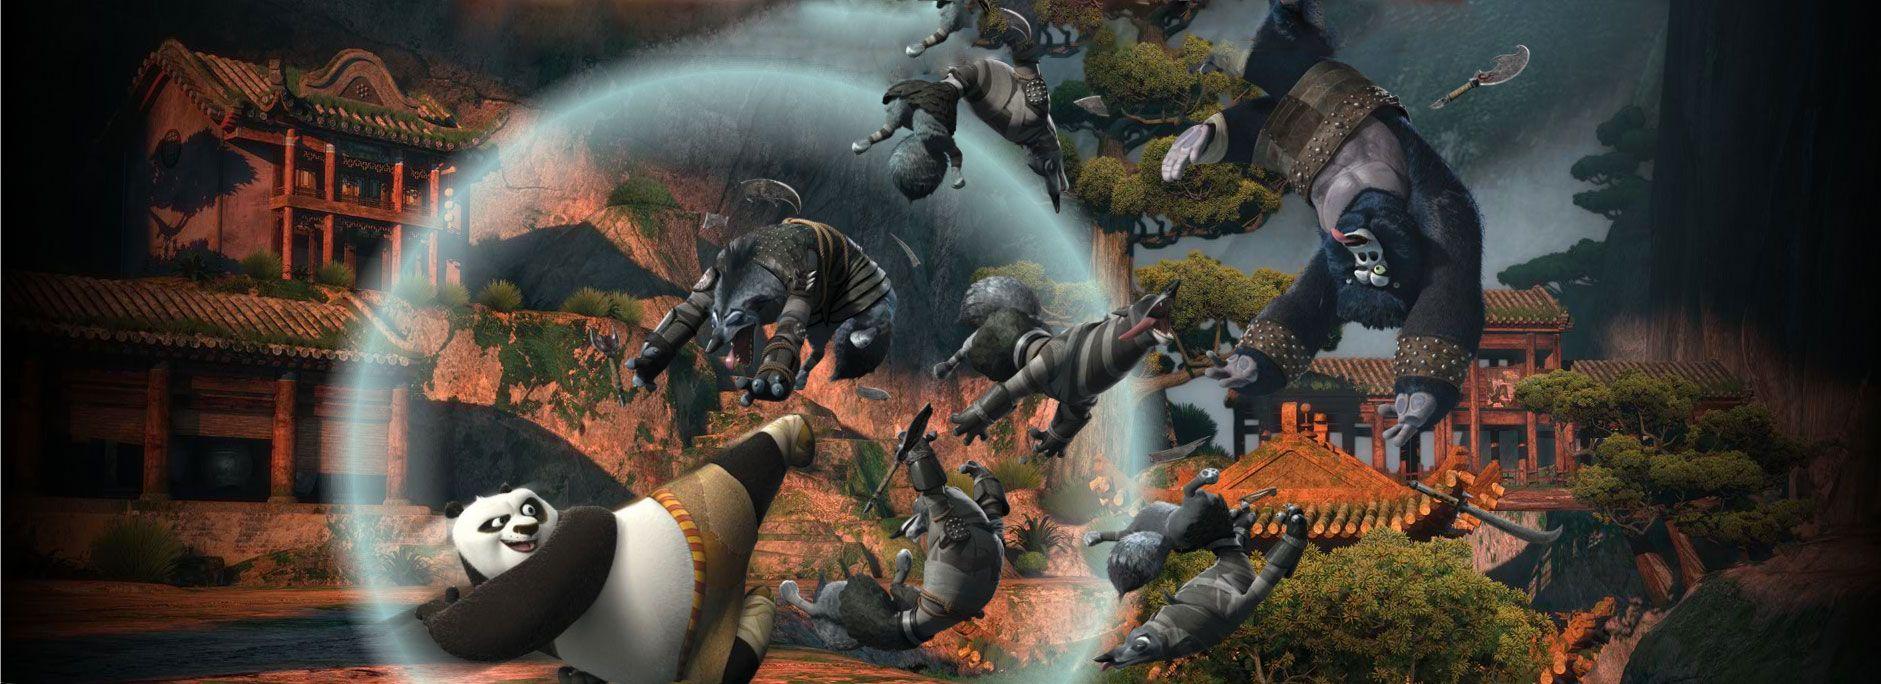 Po Fighting Wolves in Kung Fu Panda 2 Desktop Wallpaper